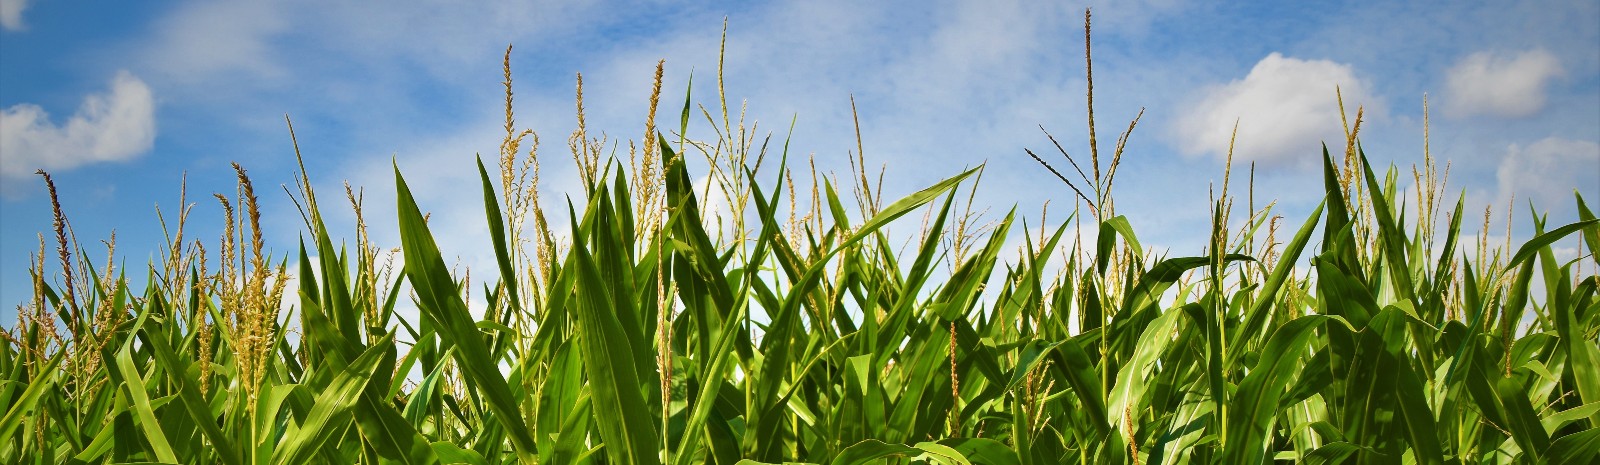 Corn field against a blue sky